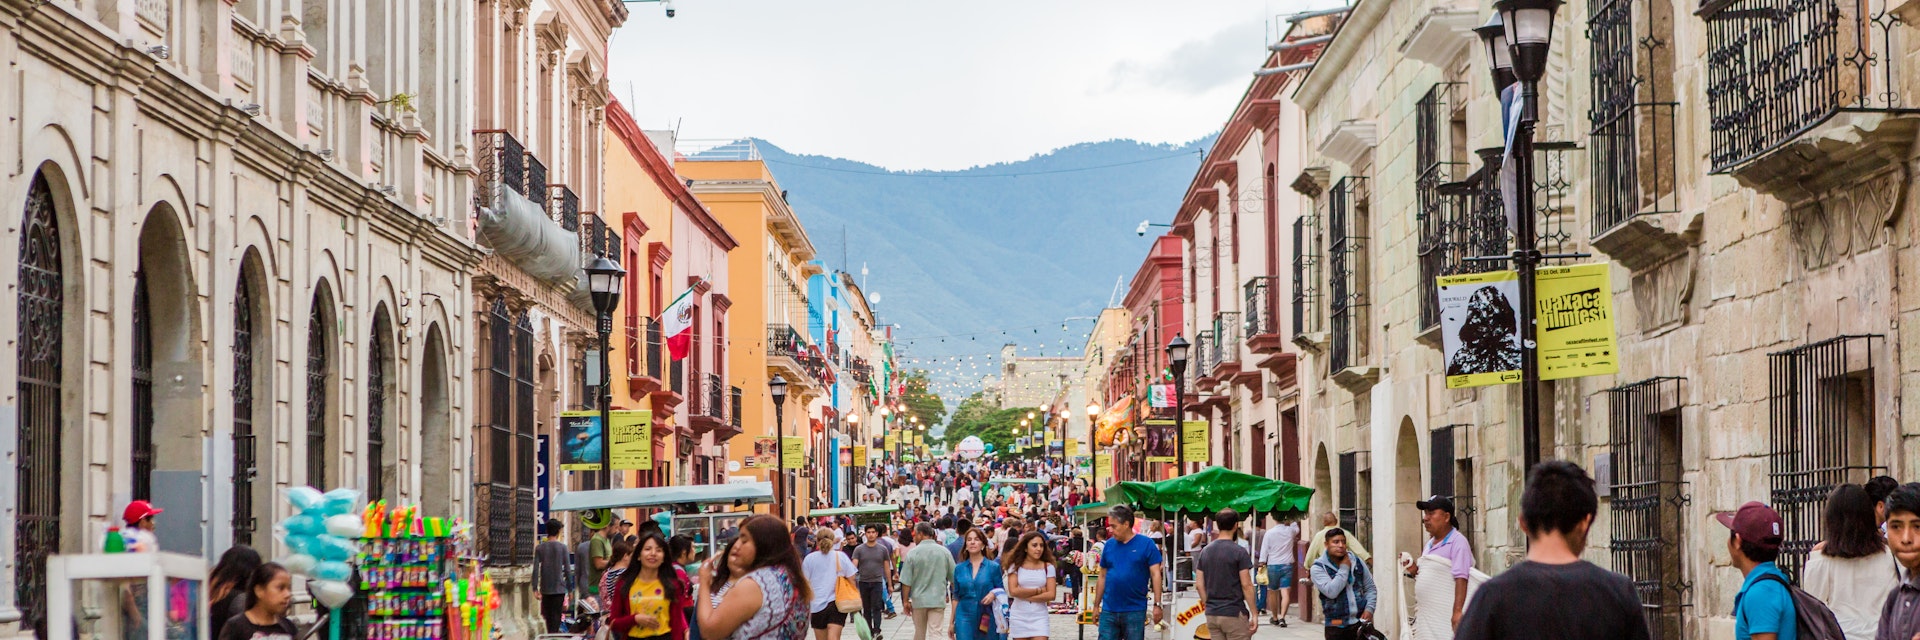 Busy pedestrian street, Calle Alcalá, in downtown Oaxaca.